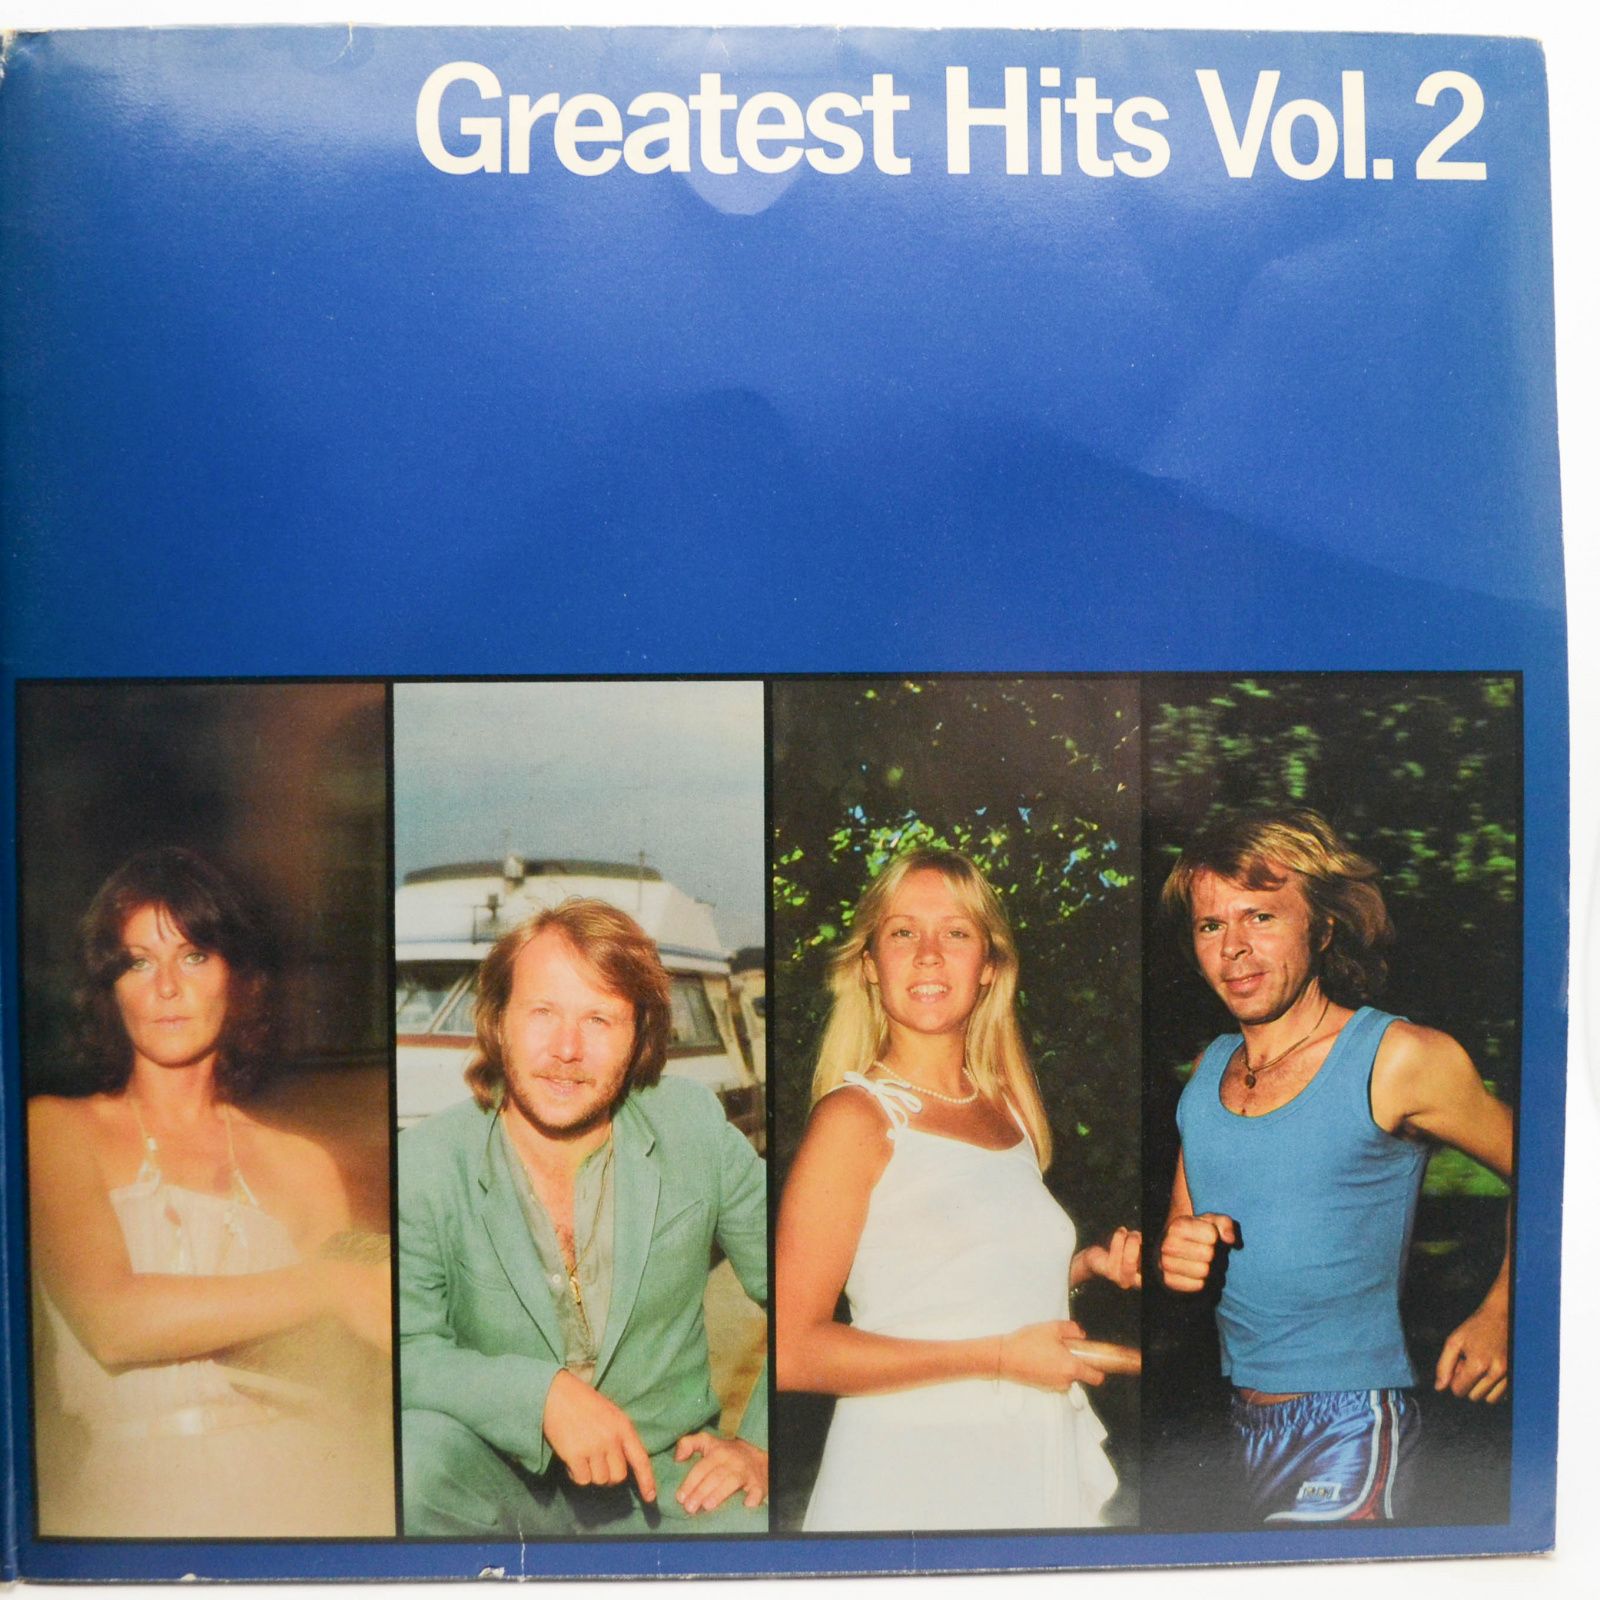 ABBA — Greatest Hits Vol. 2, 1979